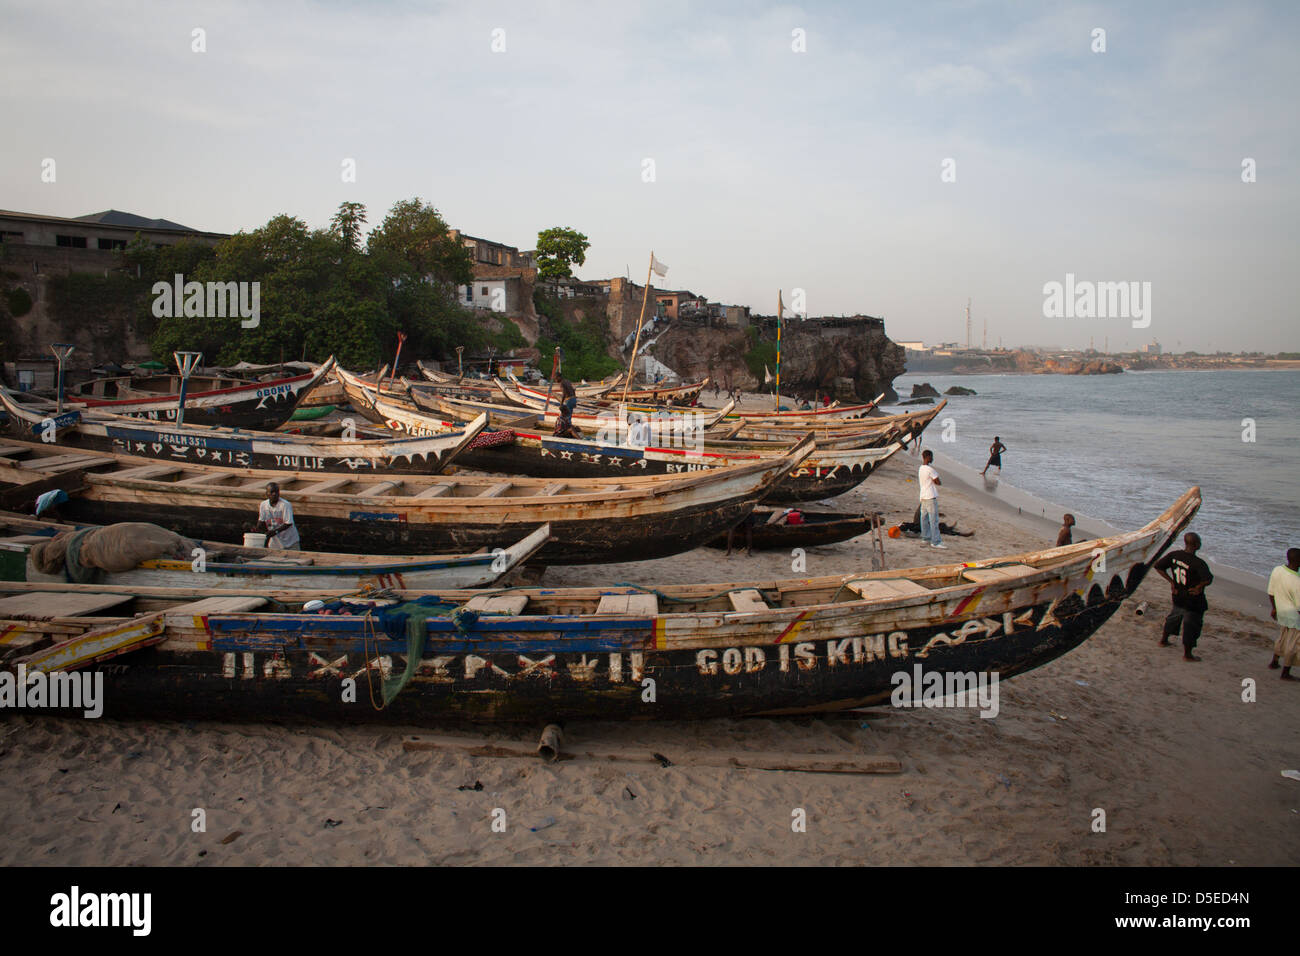 Angelboote/Fischerboote am Strand in Accra, Ghana. Stockfoto